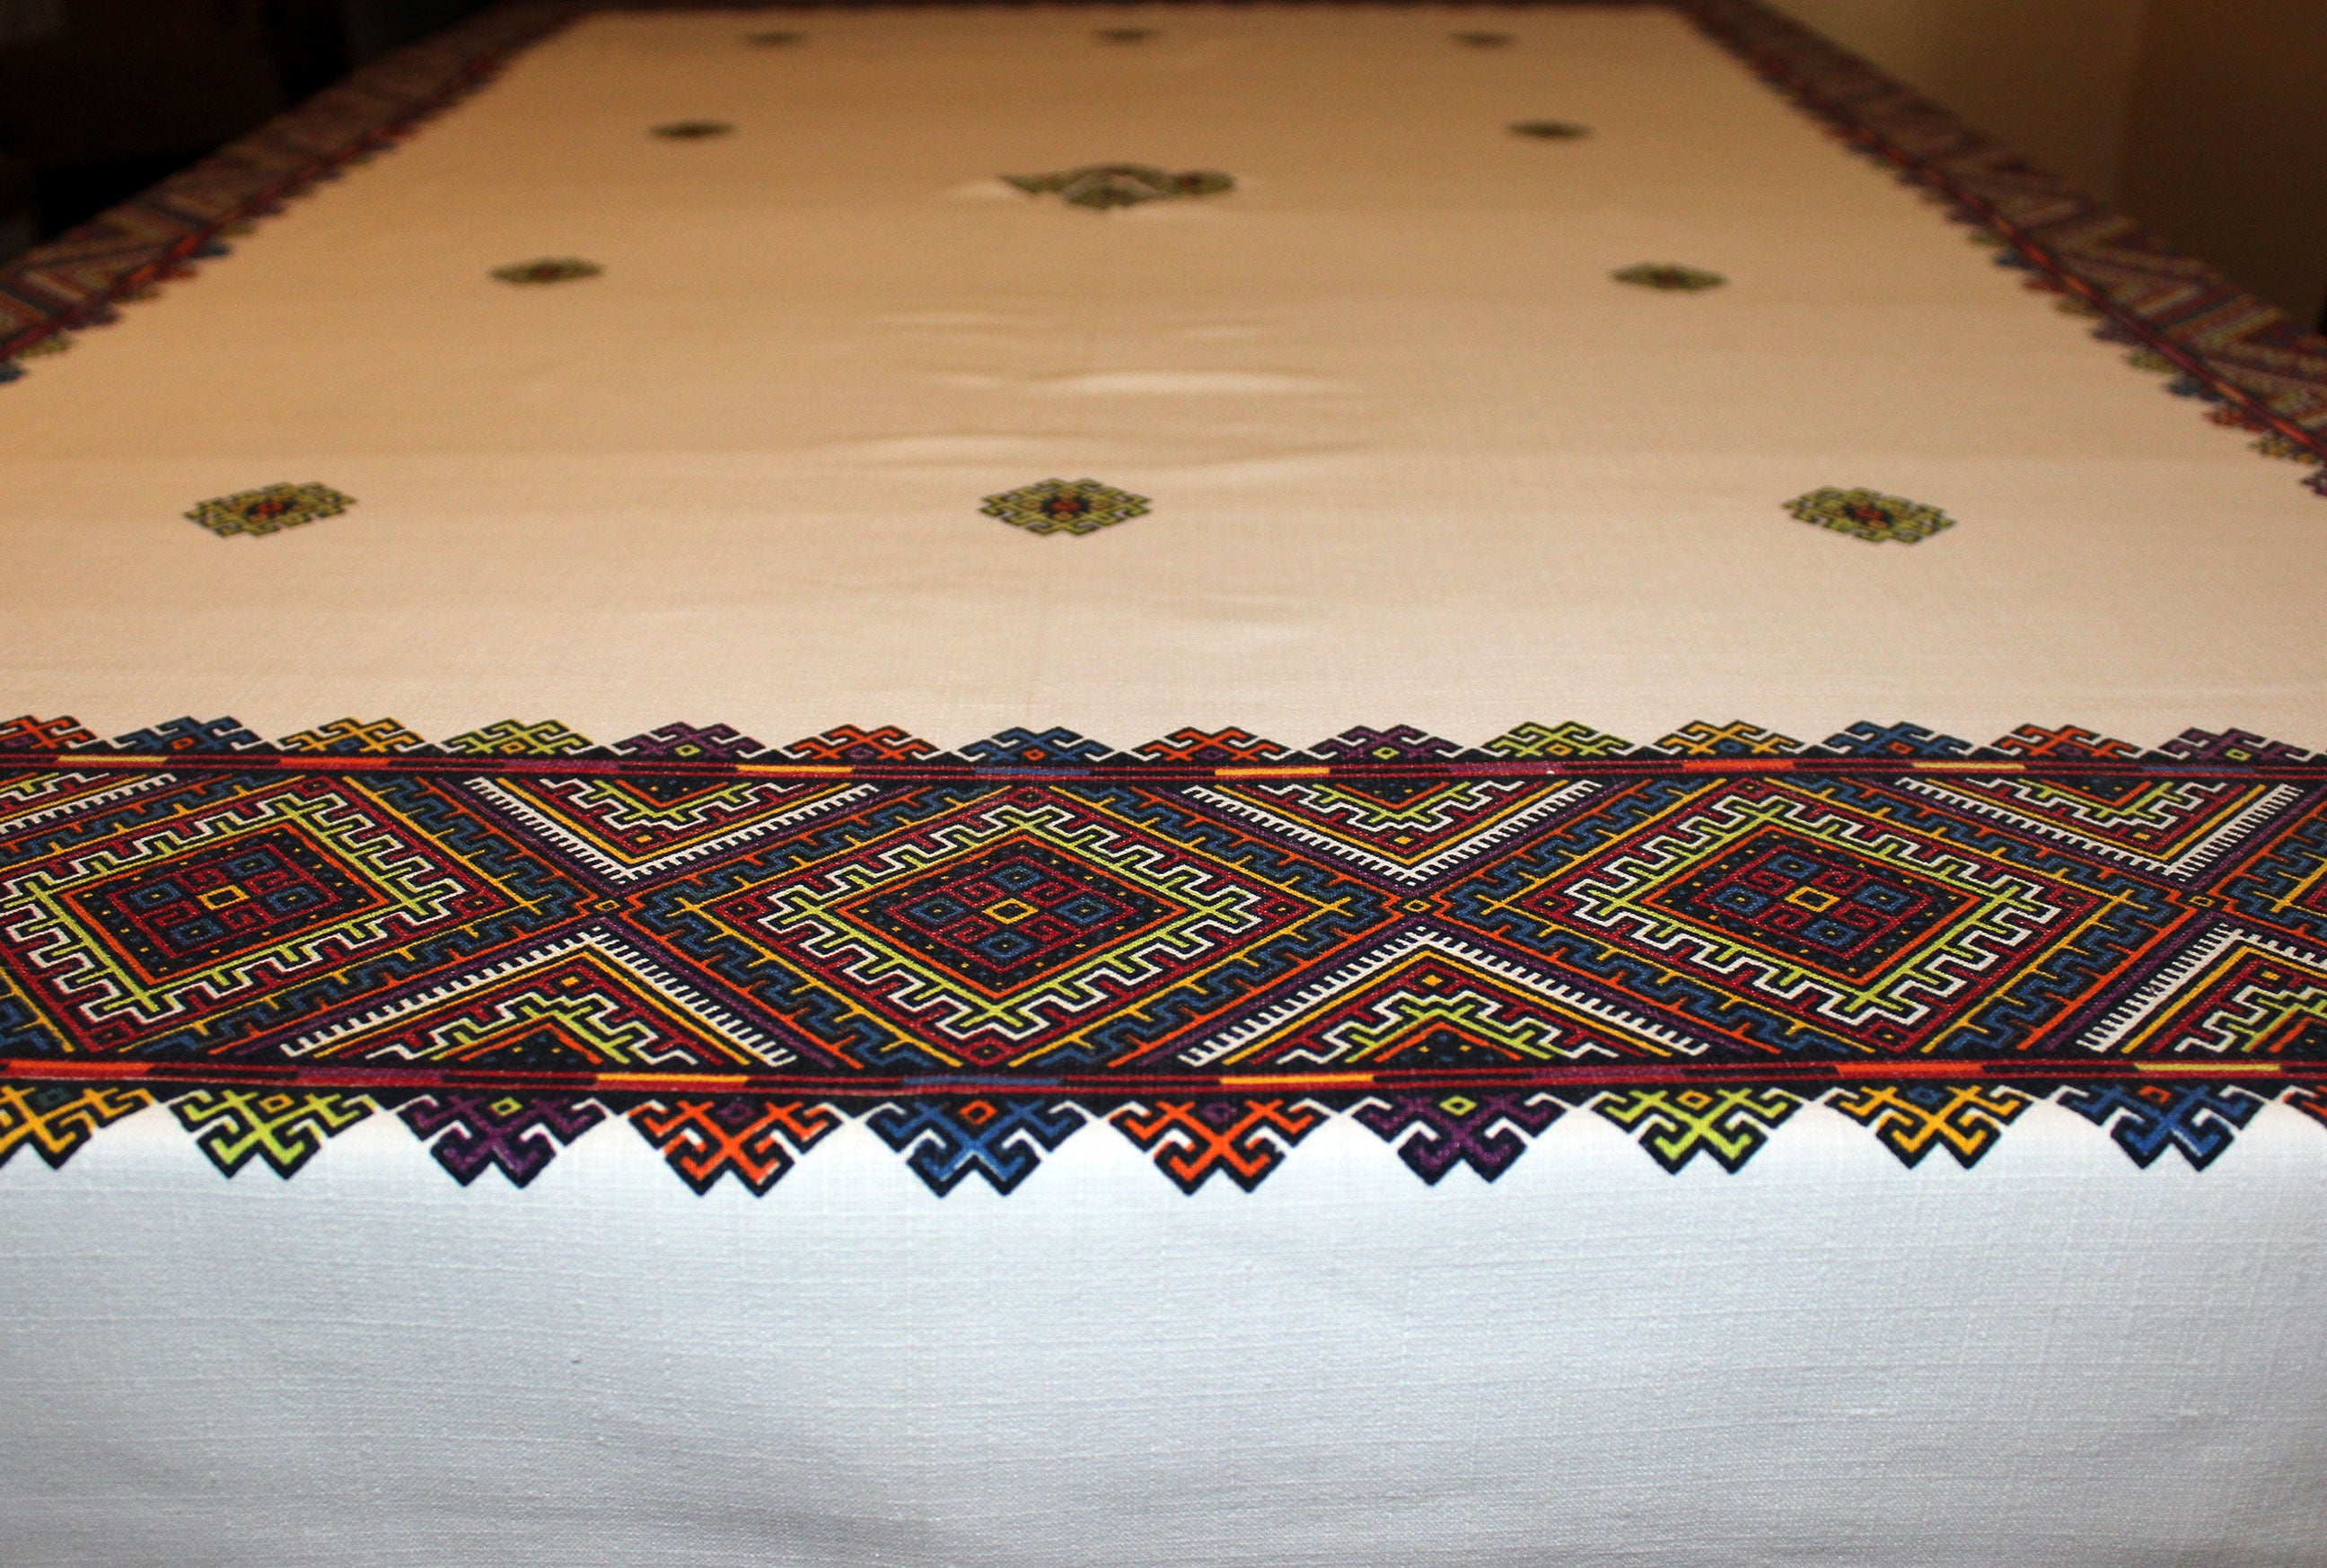 Ukrainian Print, Vintage Linen Tablecloth